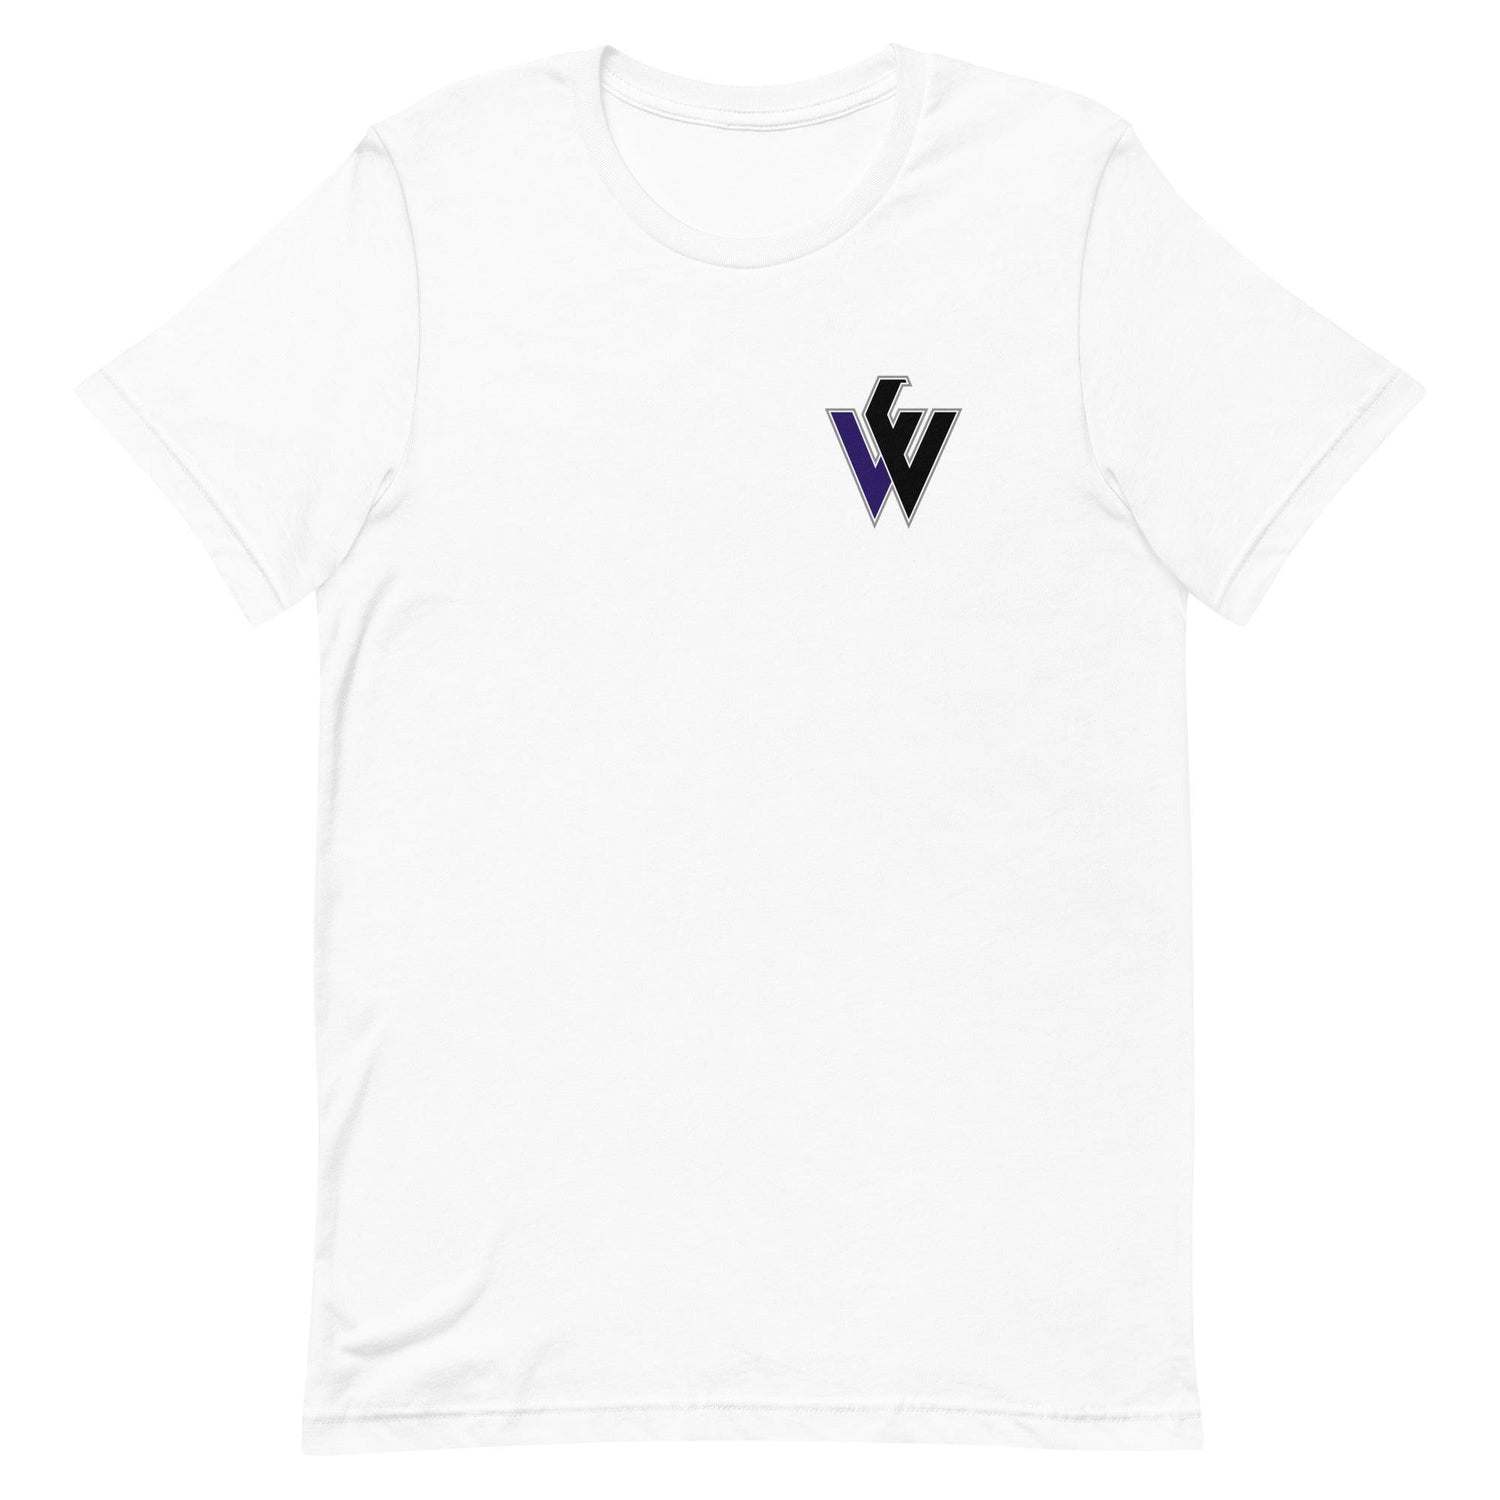 Will Ethridge “Signature” t-shirt - Fan Arch